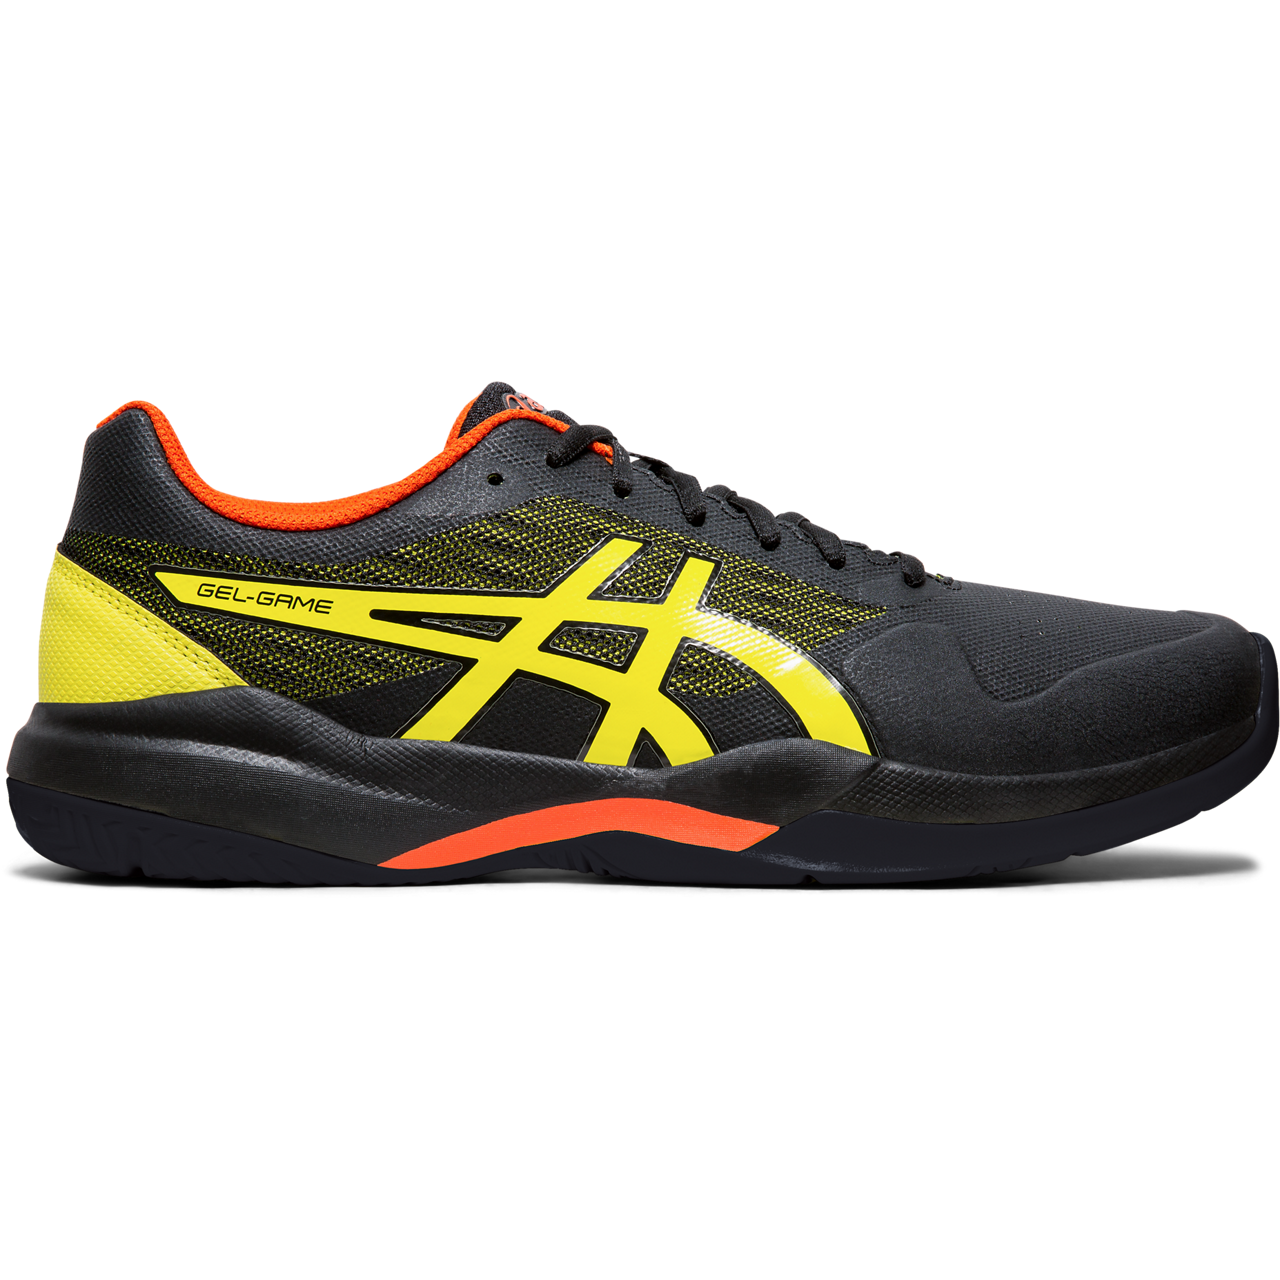 asics men's gel game 3 tennis shoes yellow/silver/black